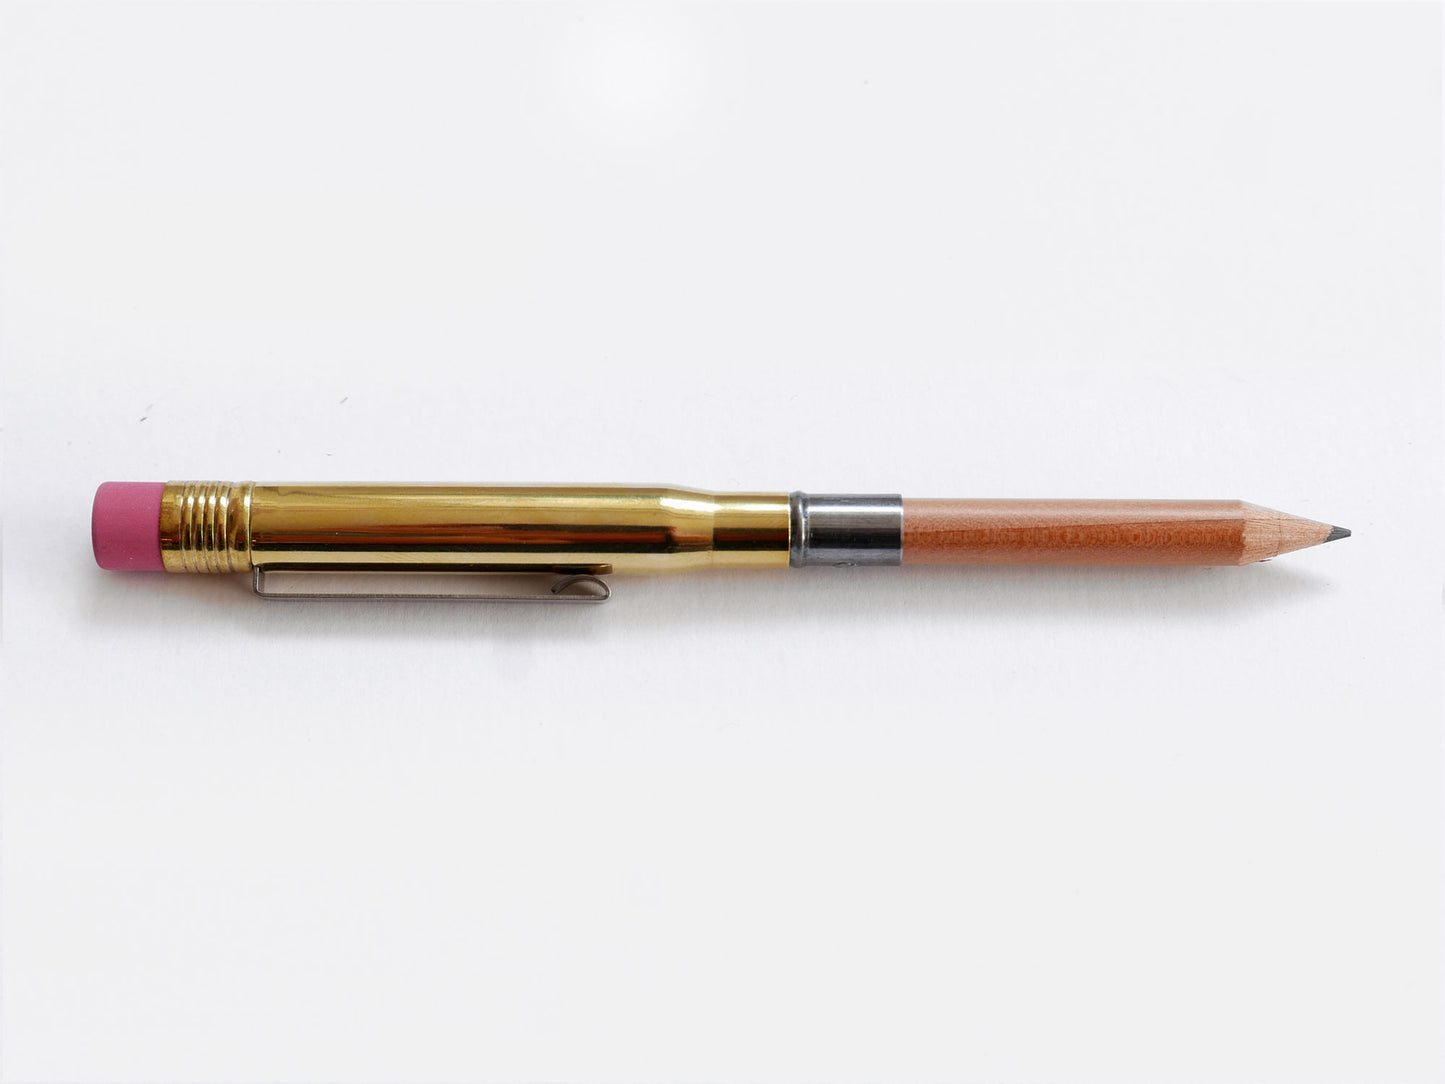 Midori Brass Pencil Holder